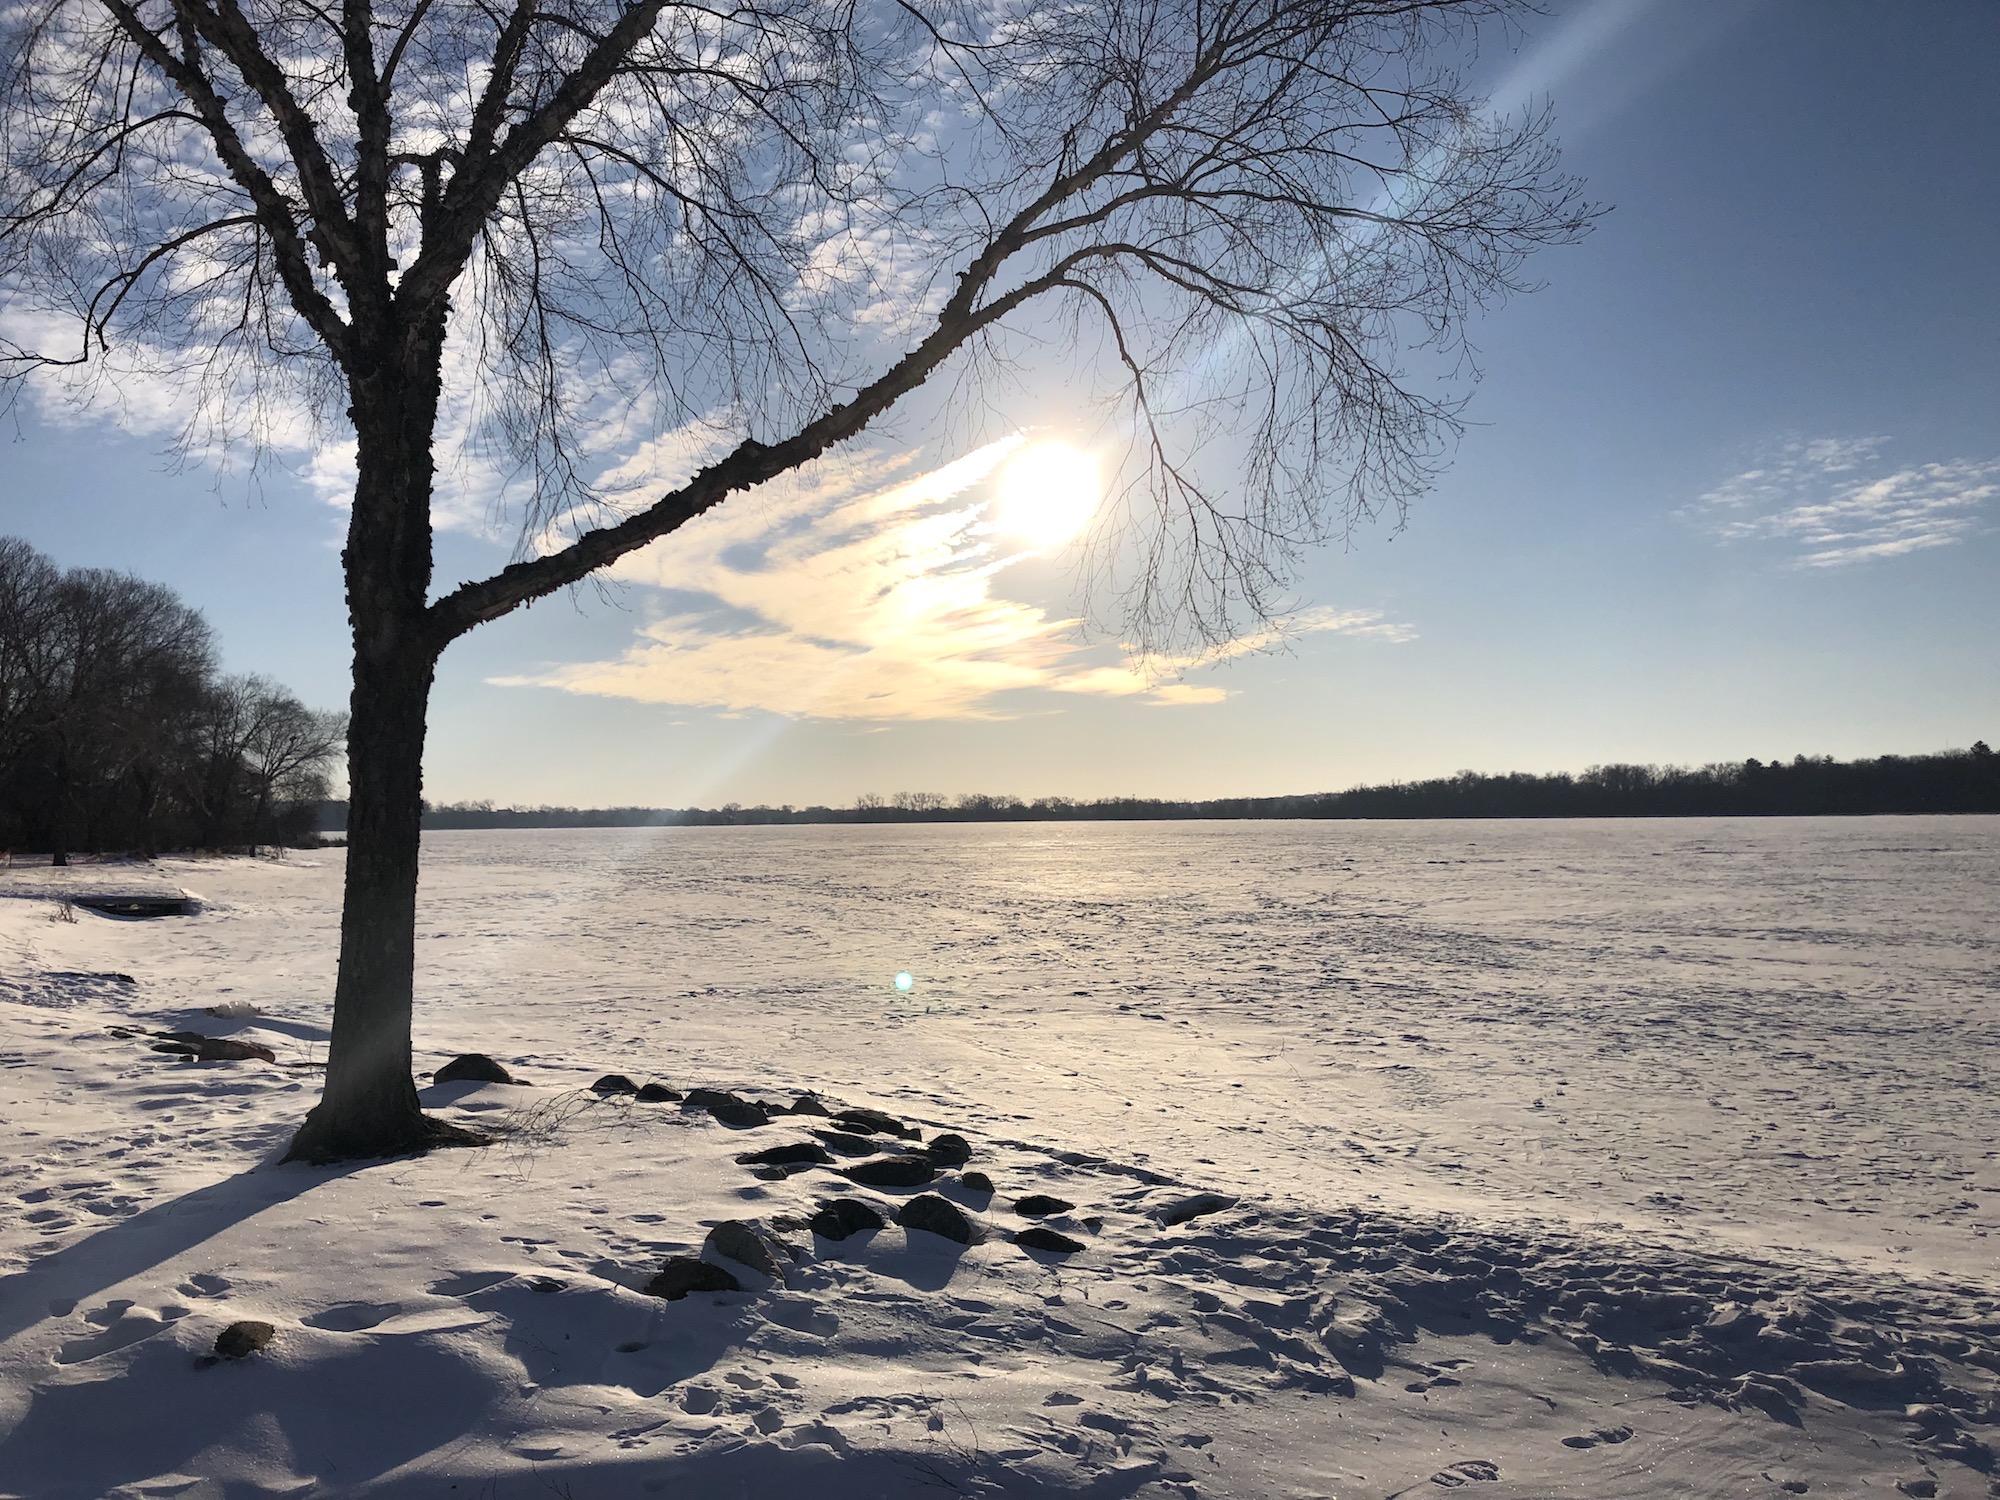 Lake Wingra on March 6, 2019.